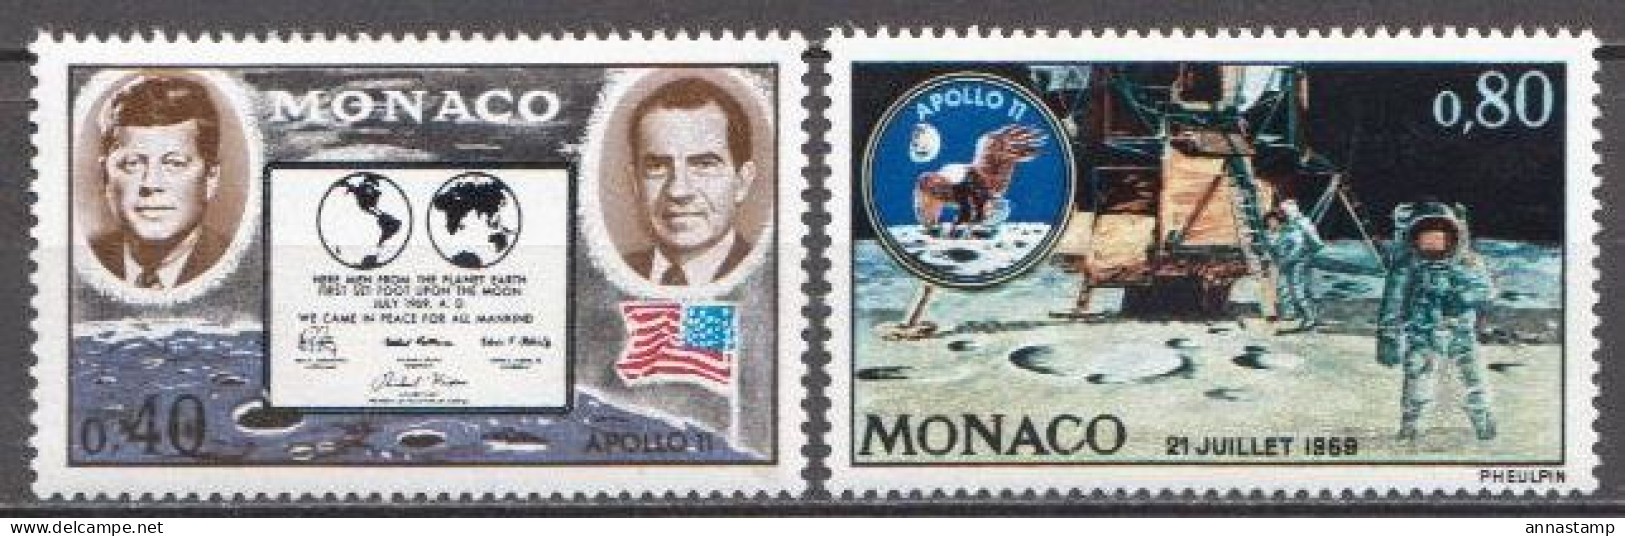 Monaco MNH Set - Europa